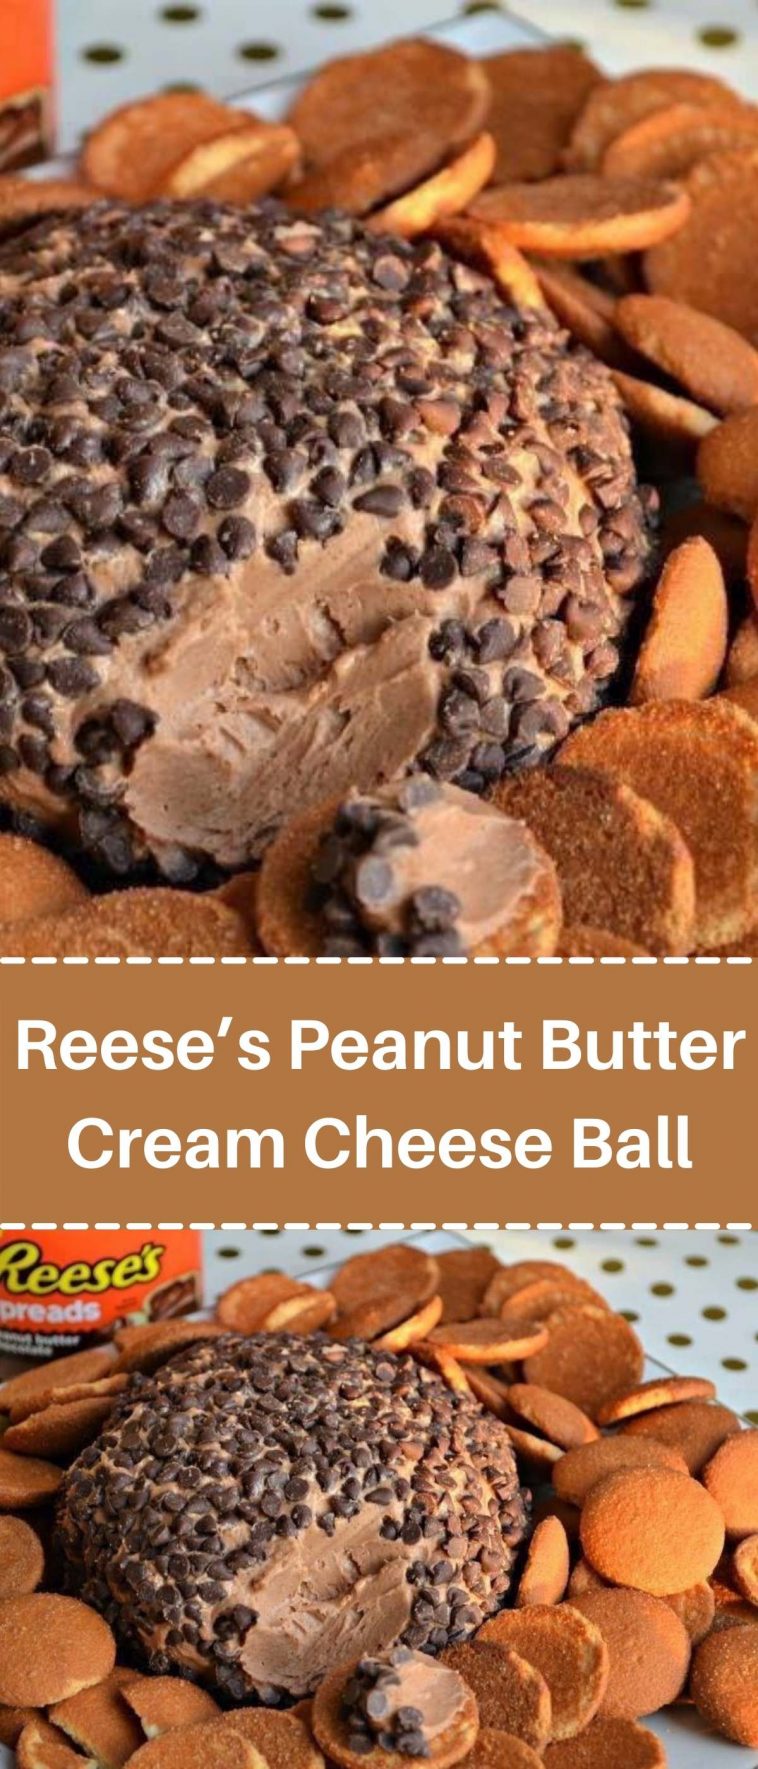 Reese’s Peanut Butter Cream Cheese Ball